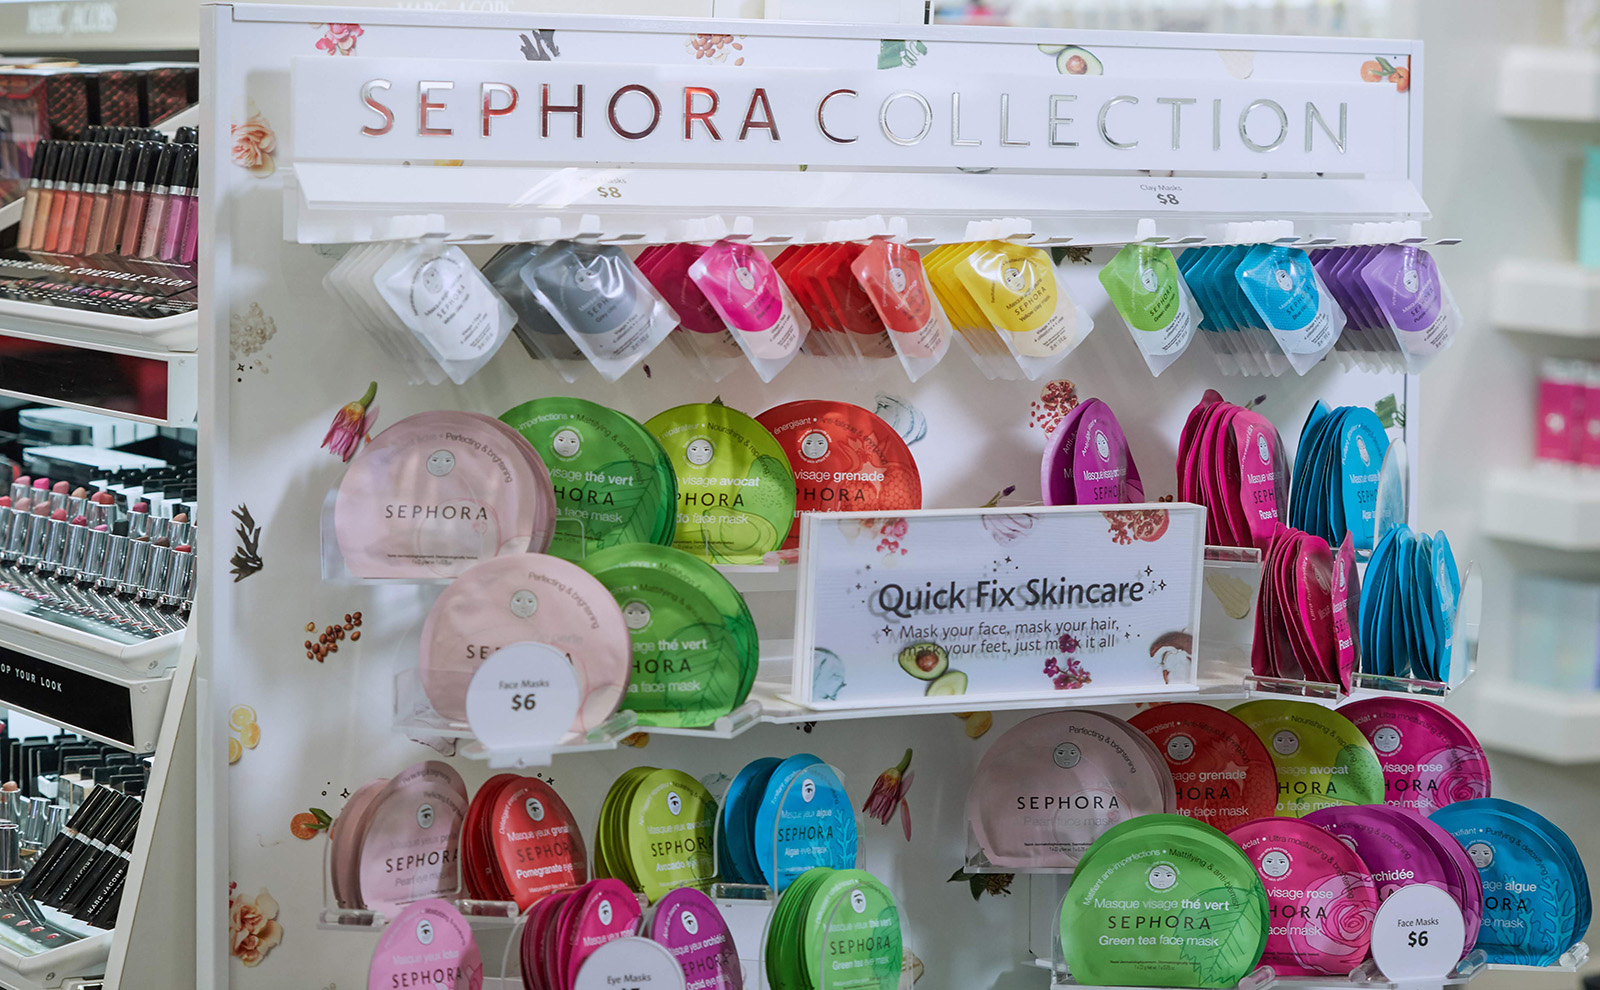 A closer look at the Sephora Endcap display